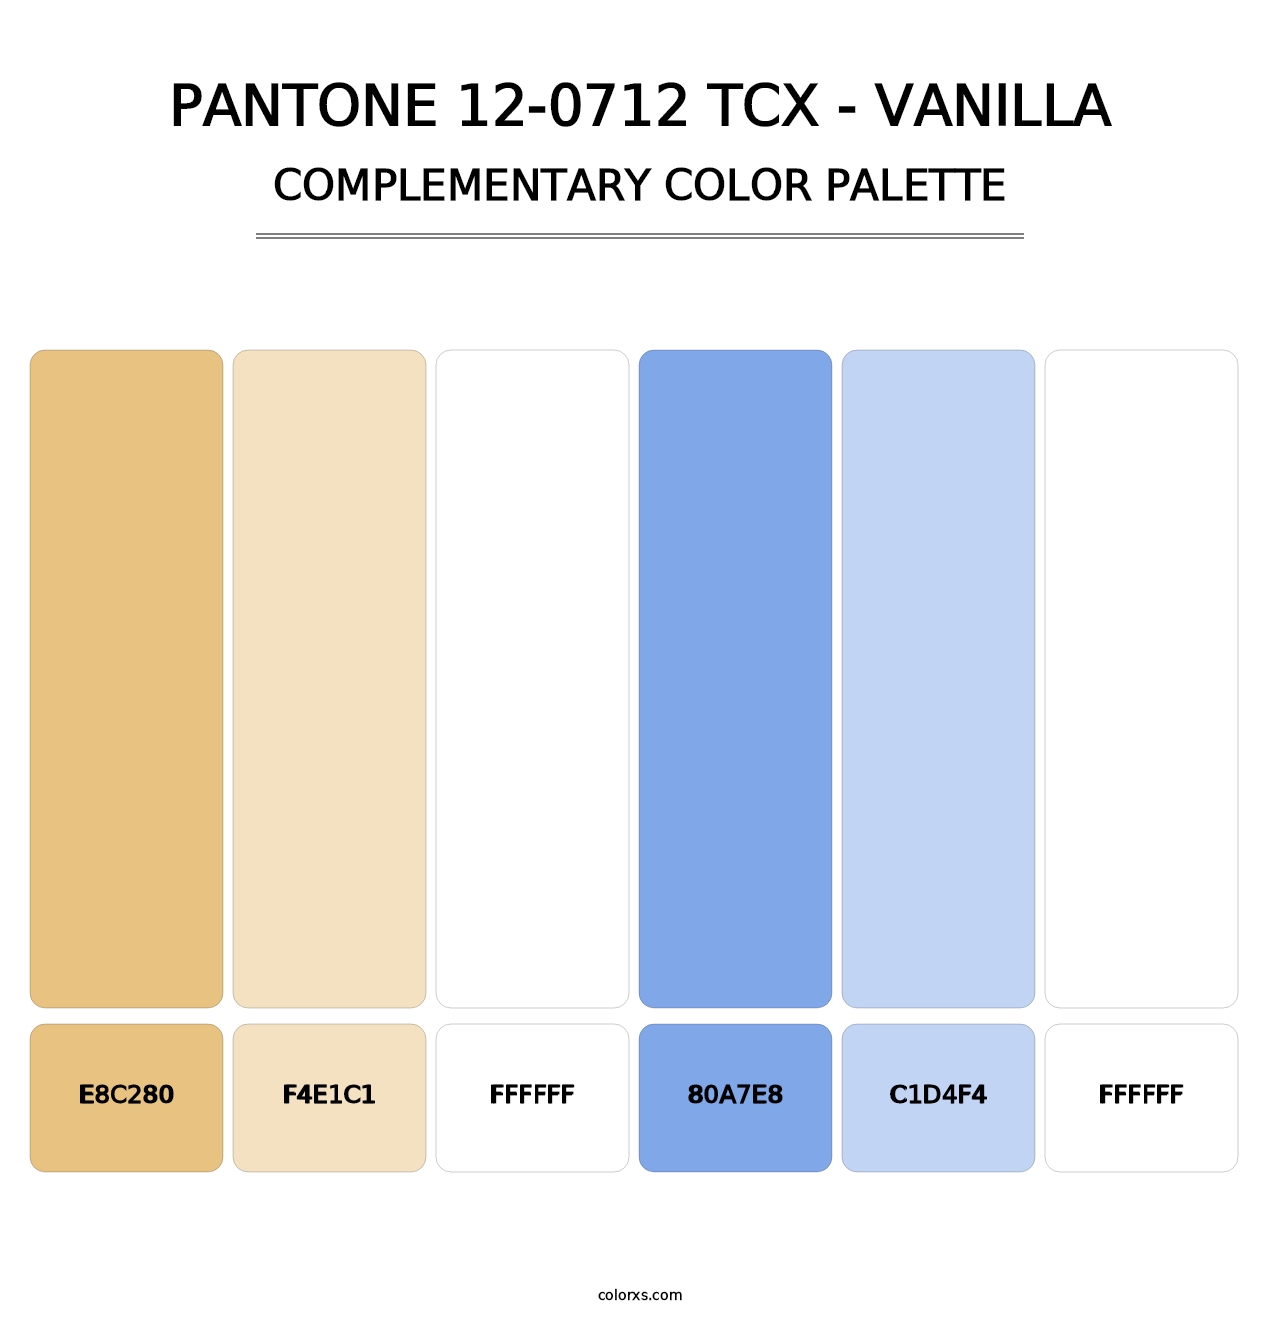 PANTONE 12-0712 TCX - Vanilla - Complementary Color Palette